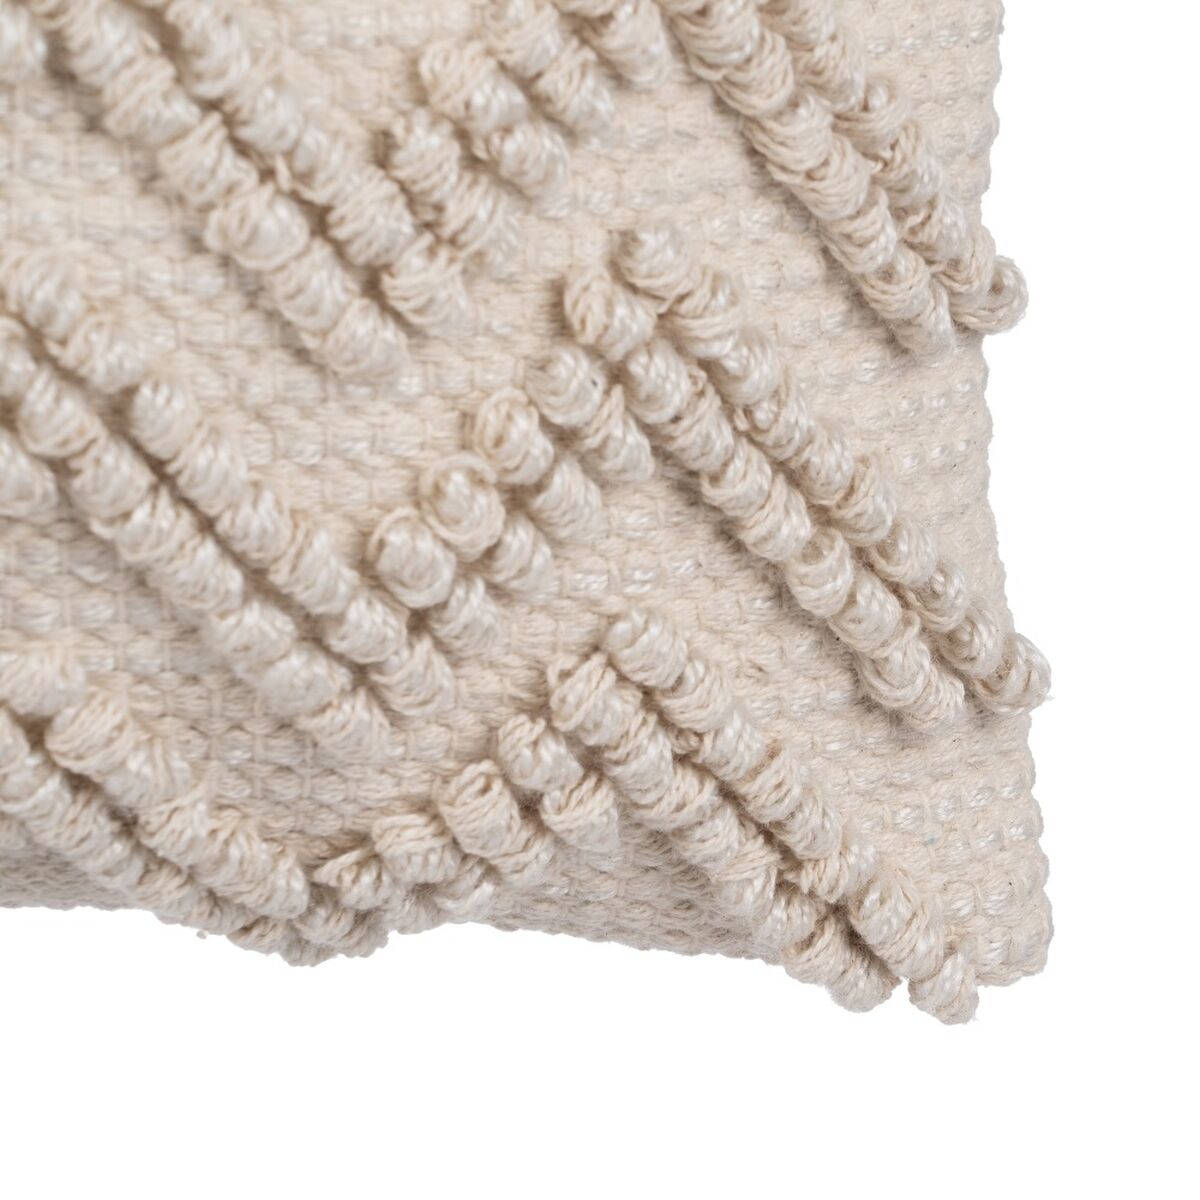 Bigbuy Home Cushion Cotton Beige 30 X 60 Cm